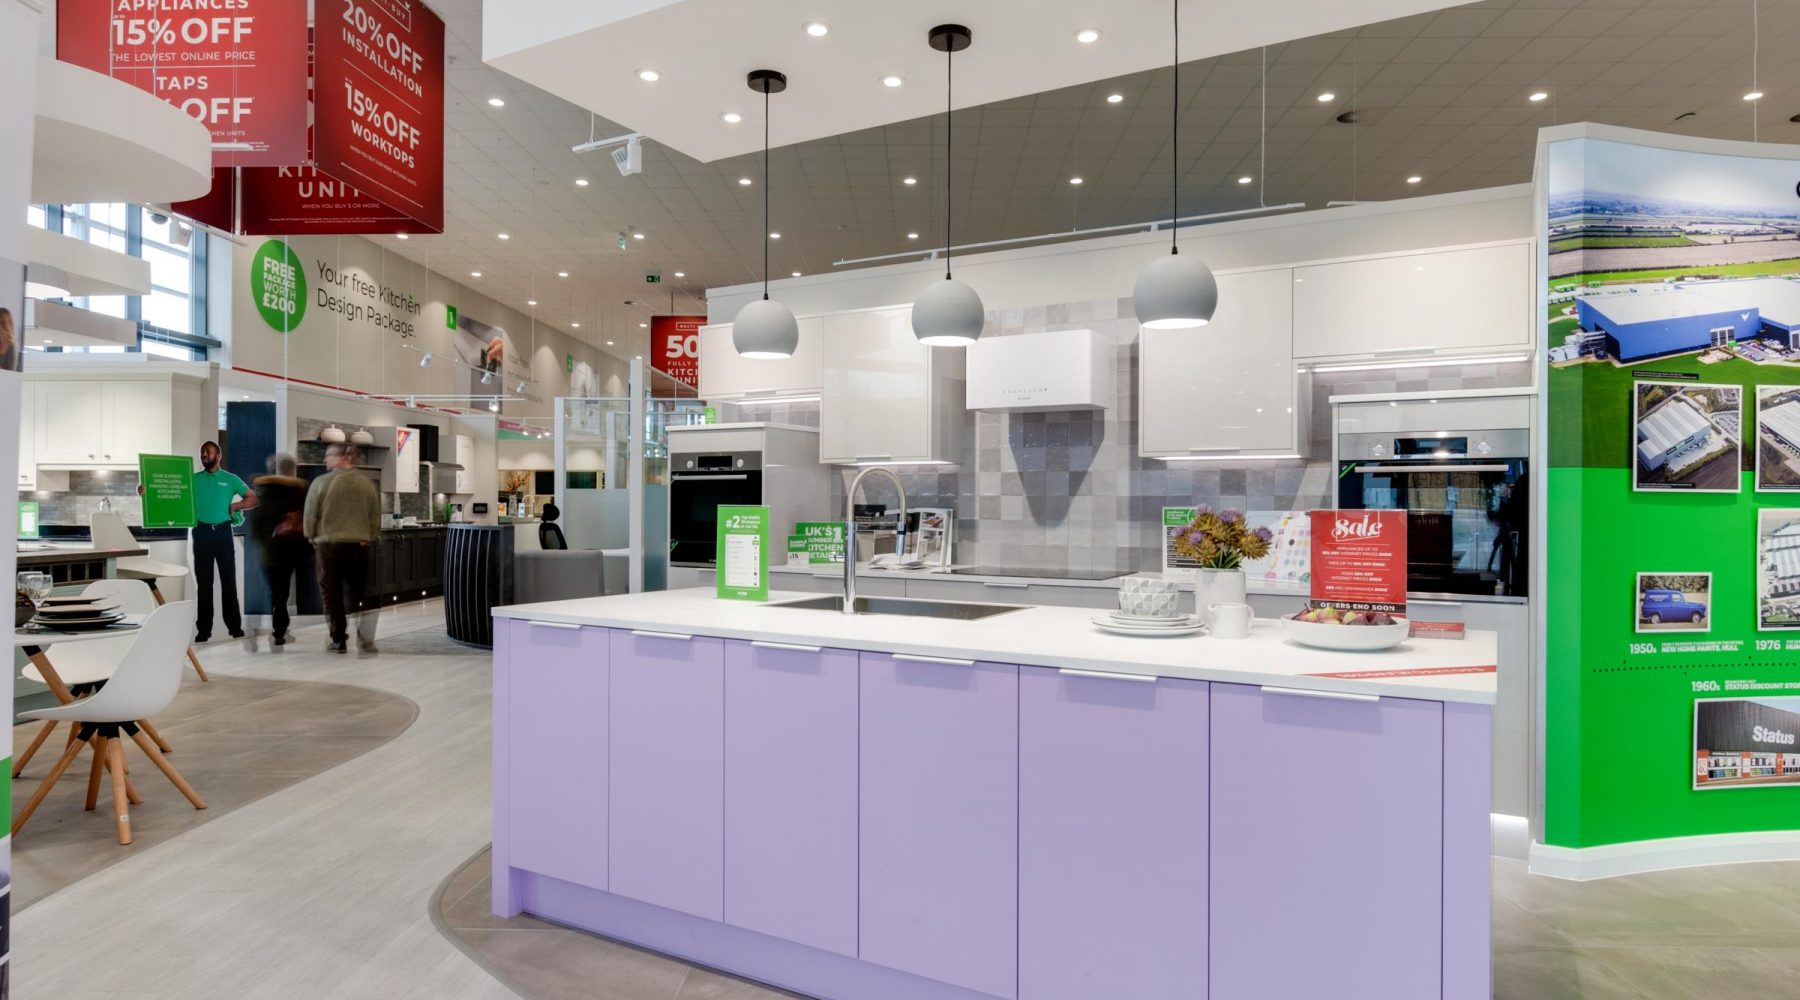 Details unveiled of Wren Kitchens' Bradford showroom